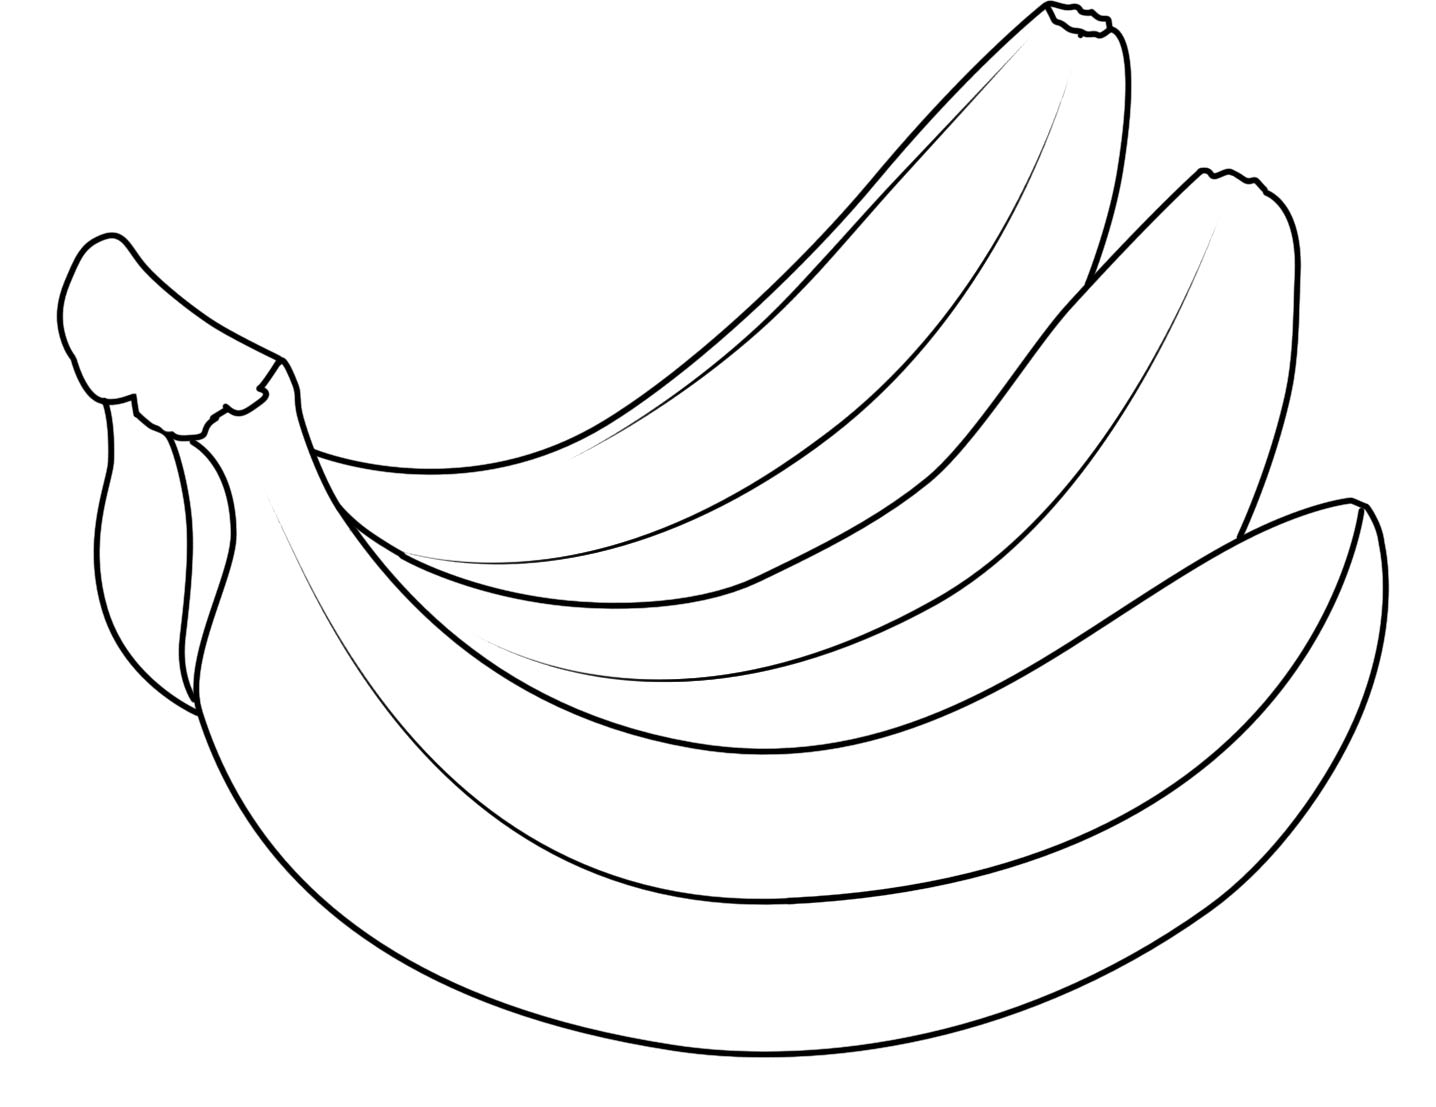 Banana coloring #3, Download drawings